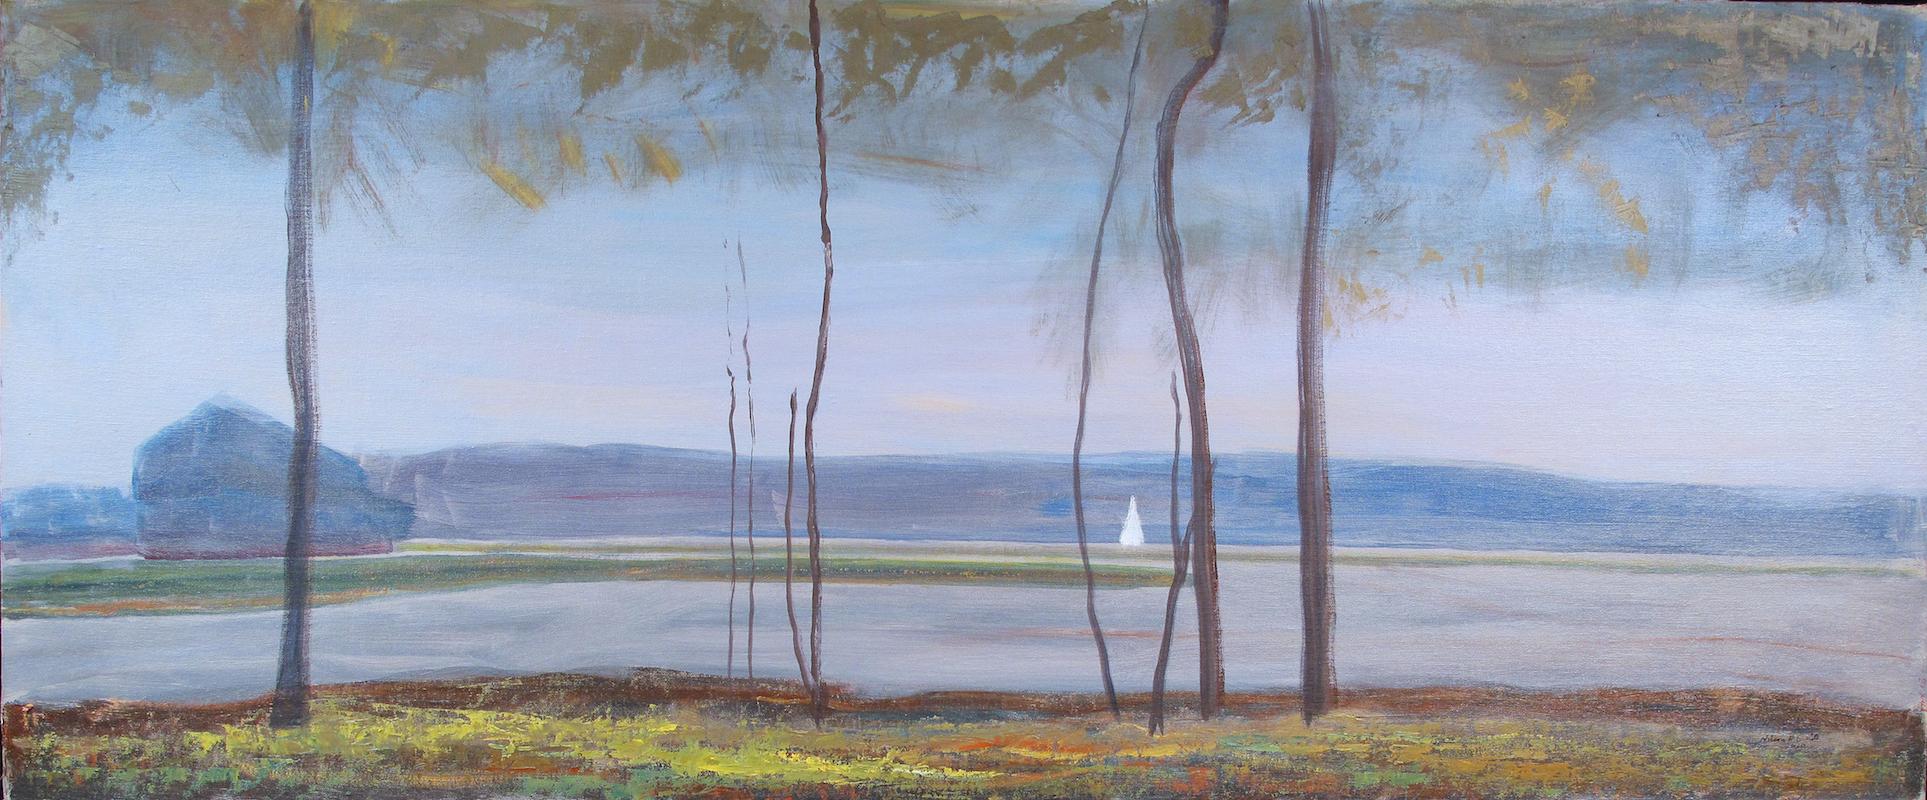 Nelson White Landscape Painting - The Woods Shelter Island 09.29.2020